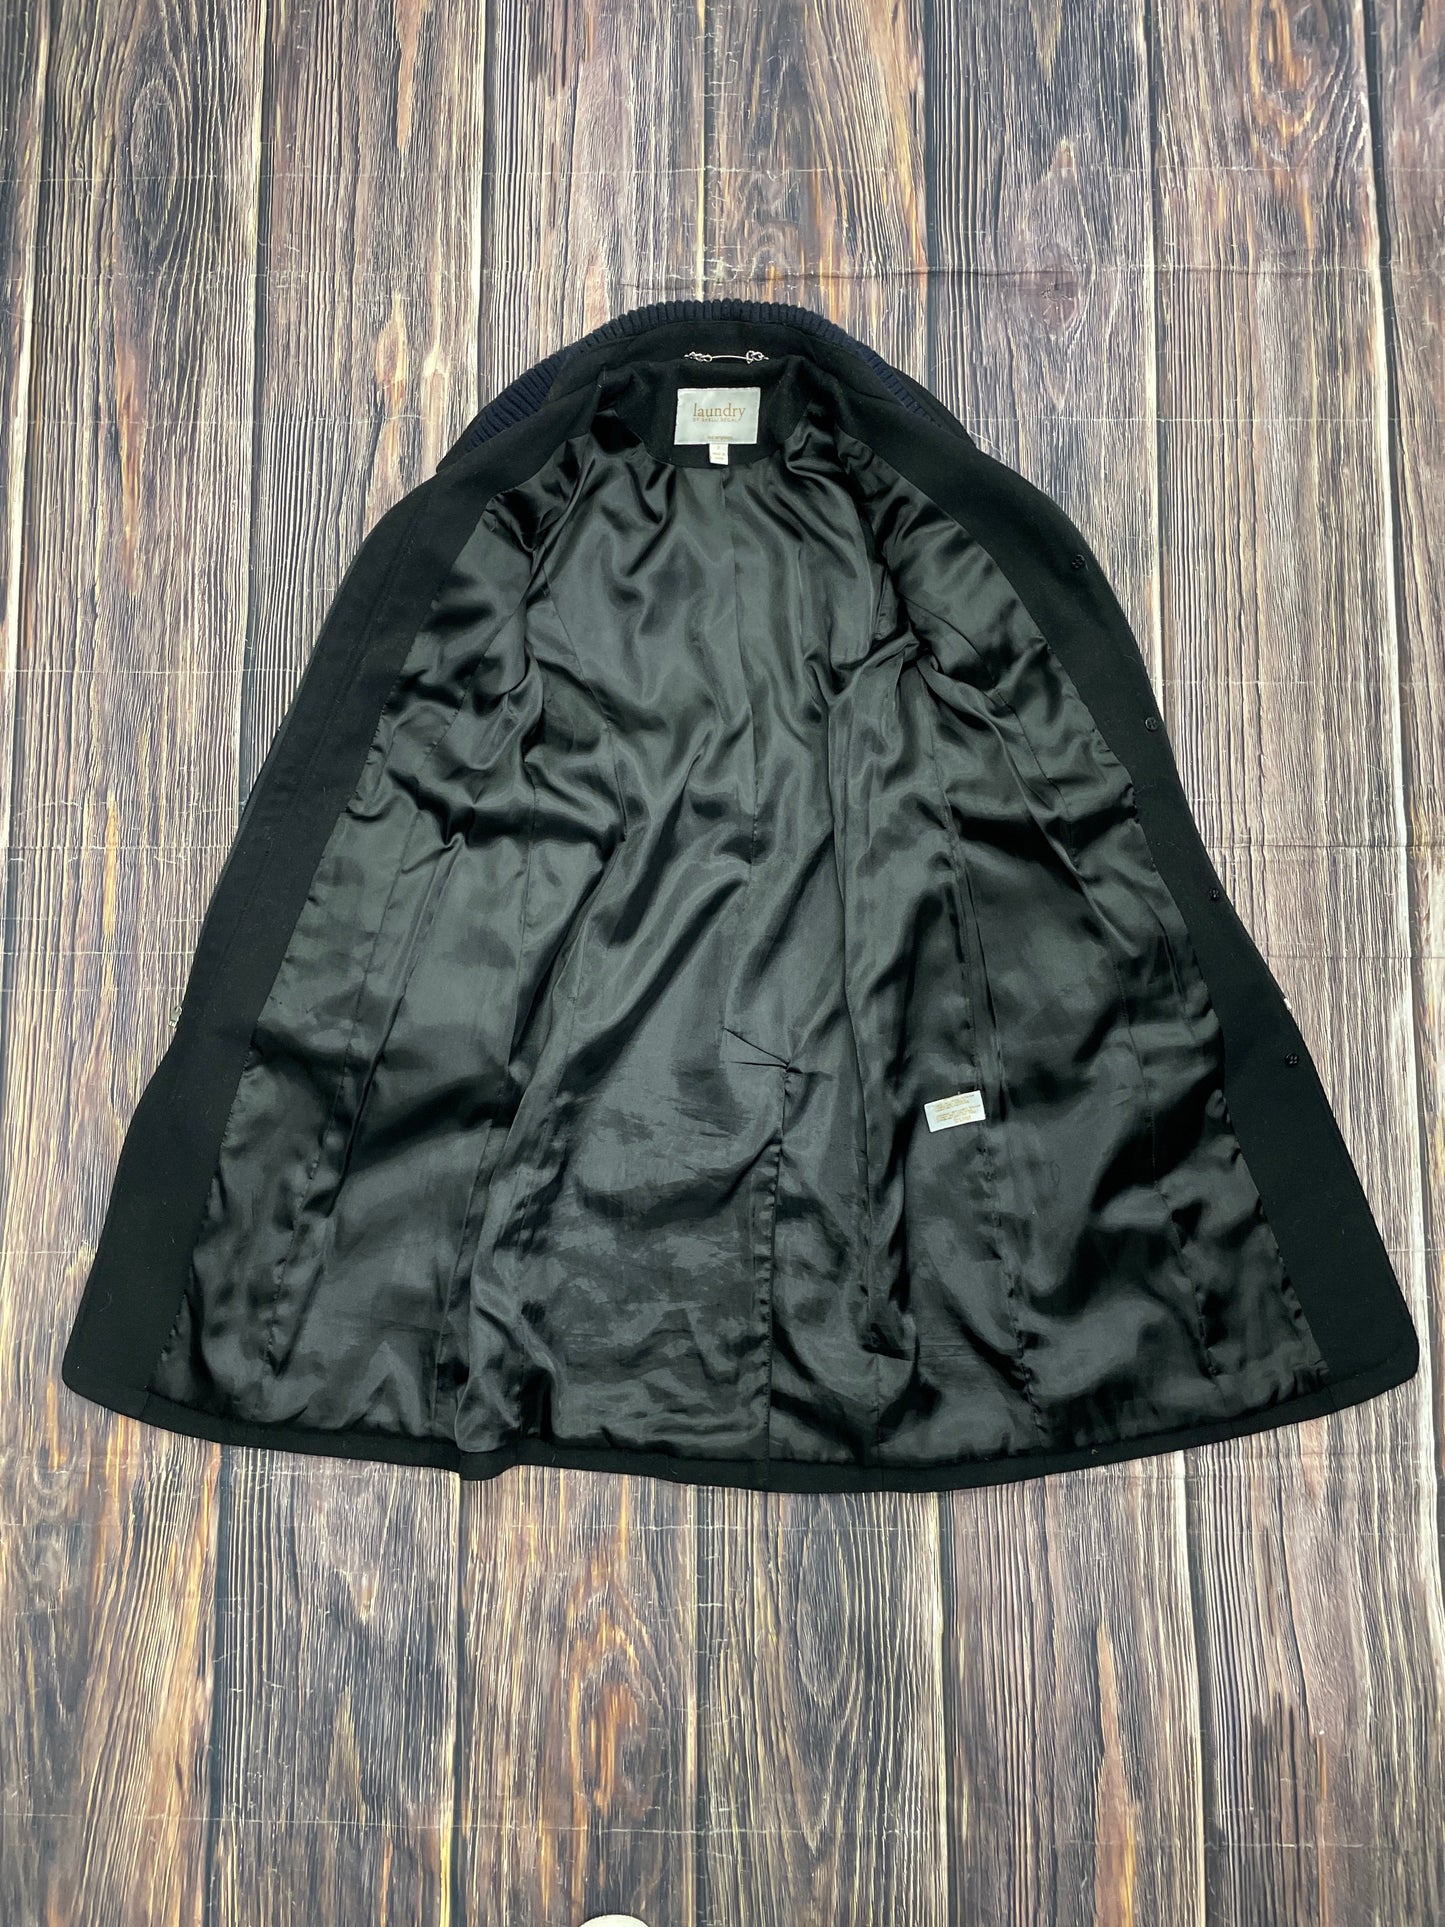 Coat Peacoat By Shelli Segal  Size: 2